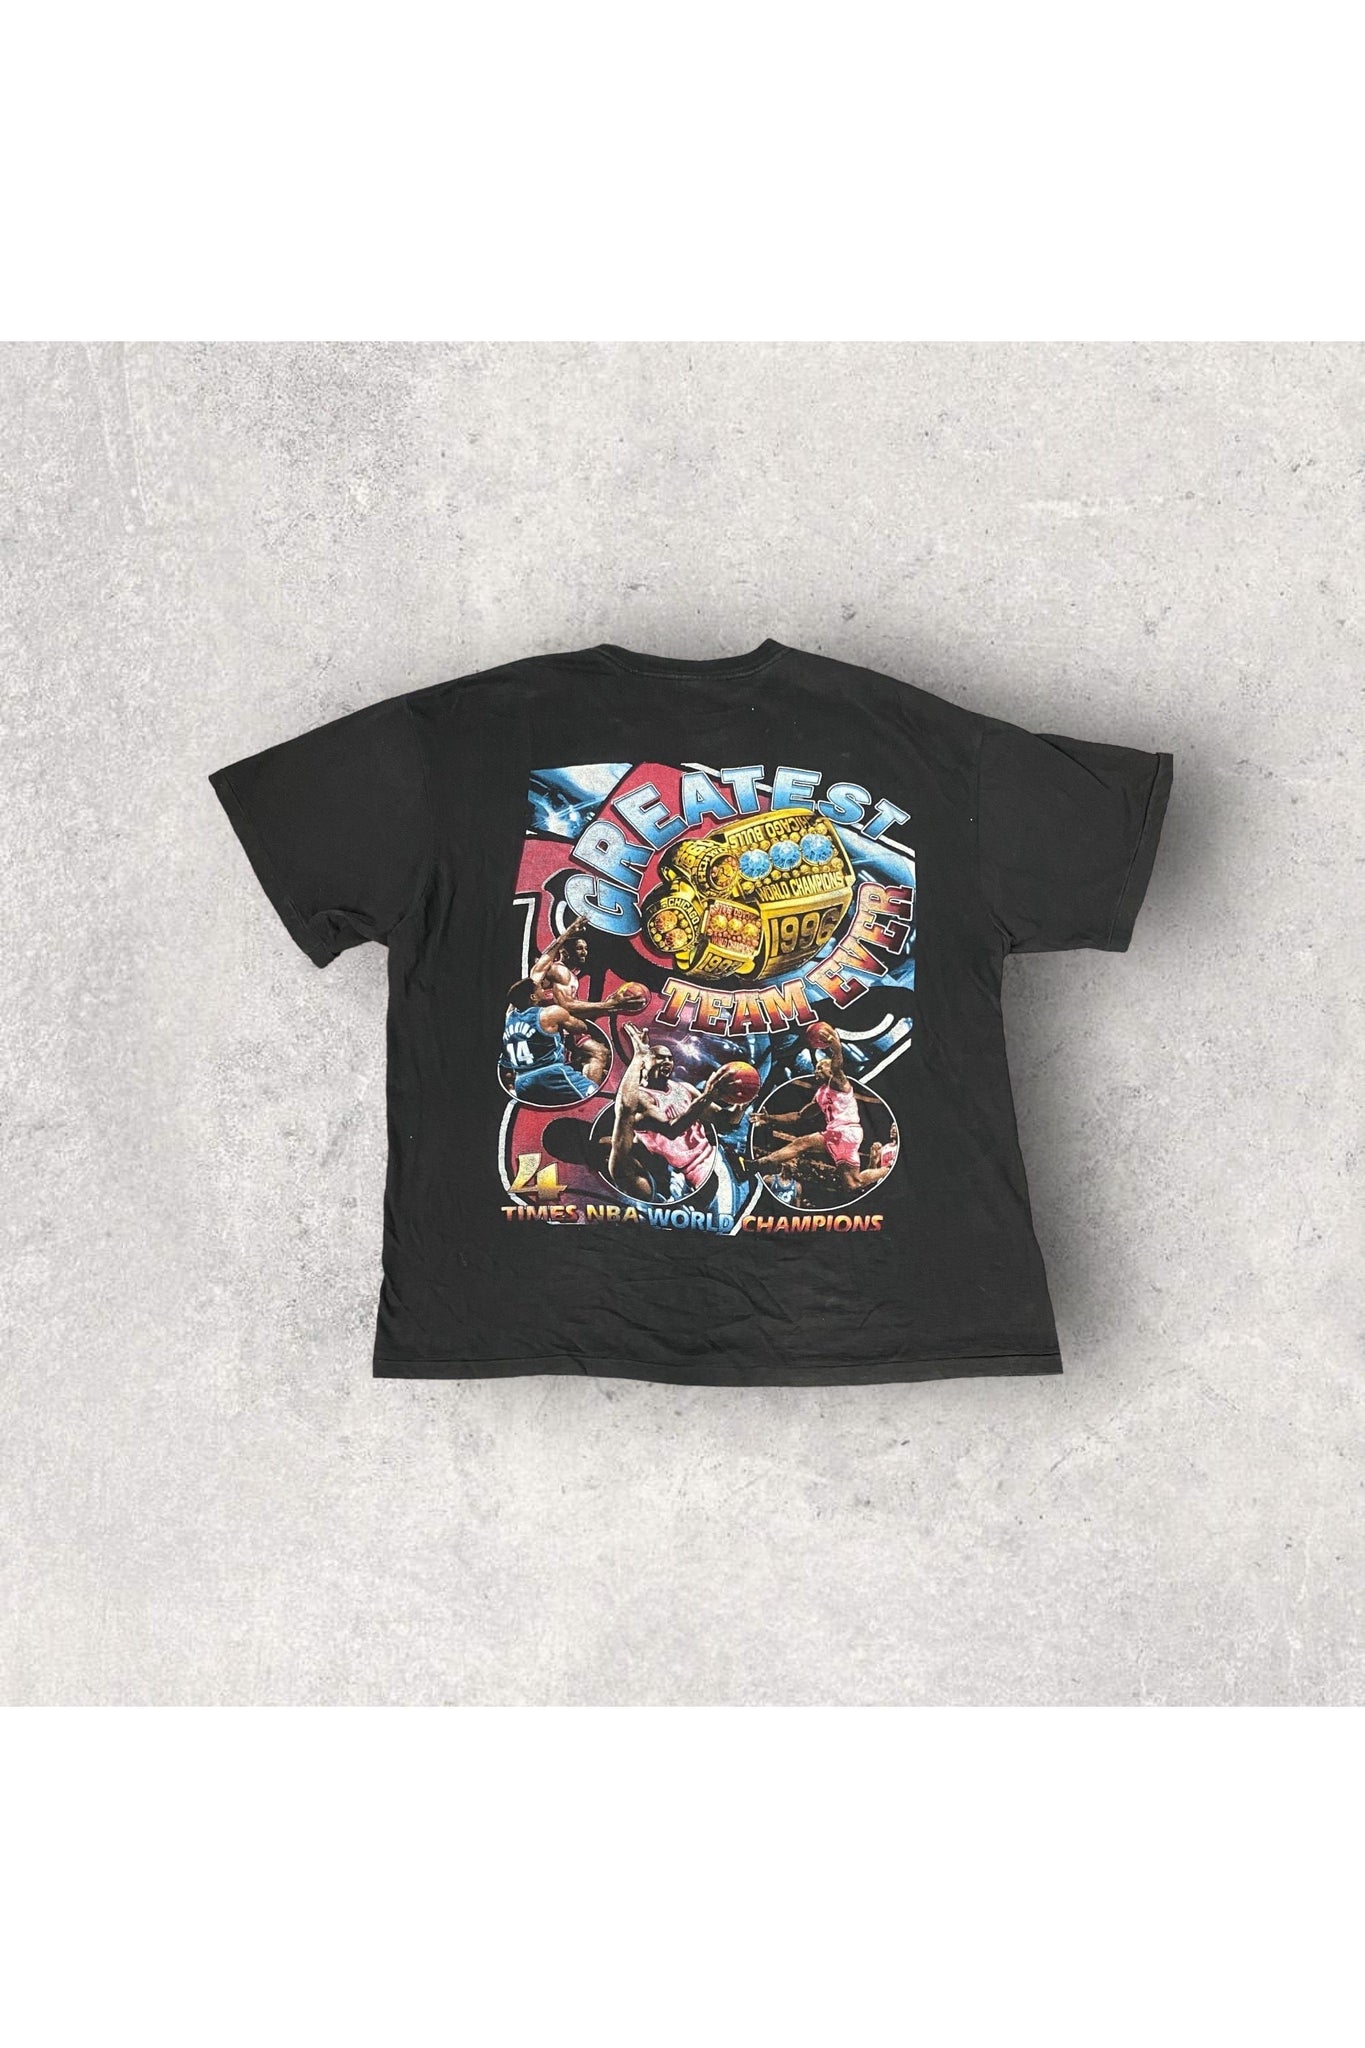 1996 Chicago Bulls Champions Rap Styled Bootleg T-Shirt Size XL